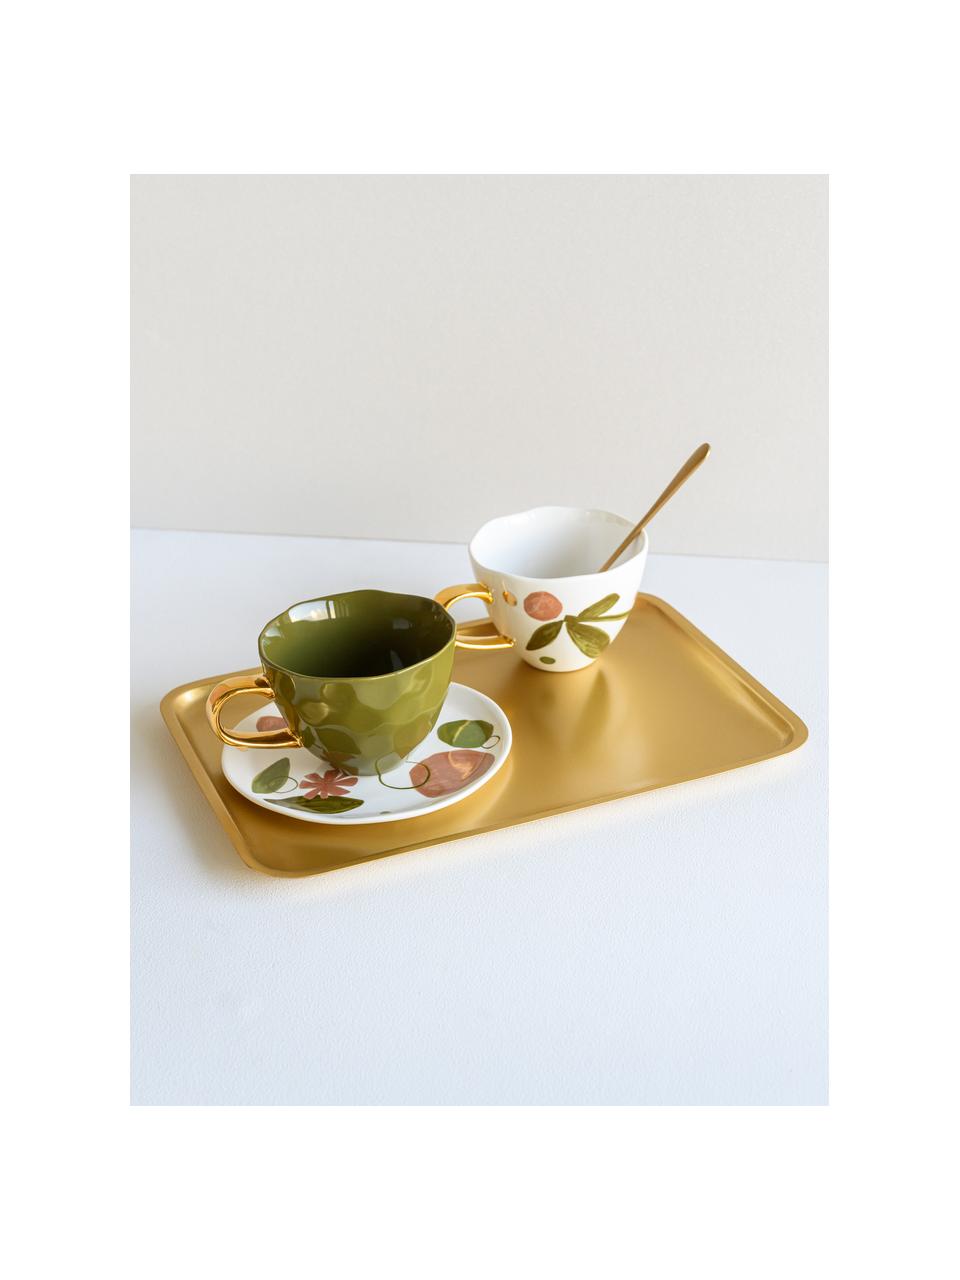 Tasse Good Morning, bunt bemalt mit goldfarbenem Griff, New Bone China, Weiß, Rosa, Grün, Goldfarben, Ø 11 x H 9 cm